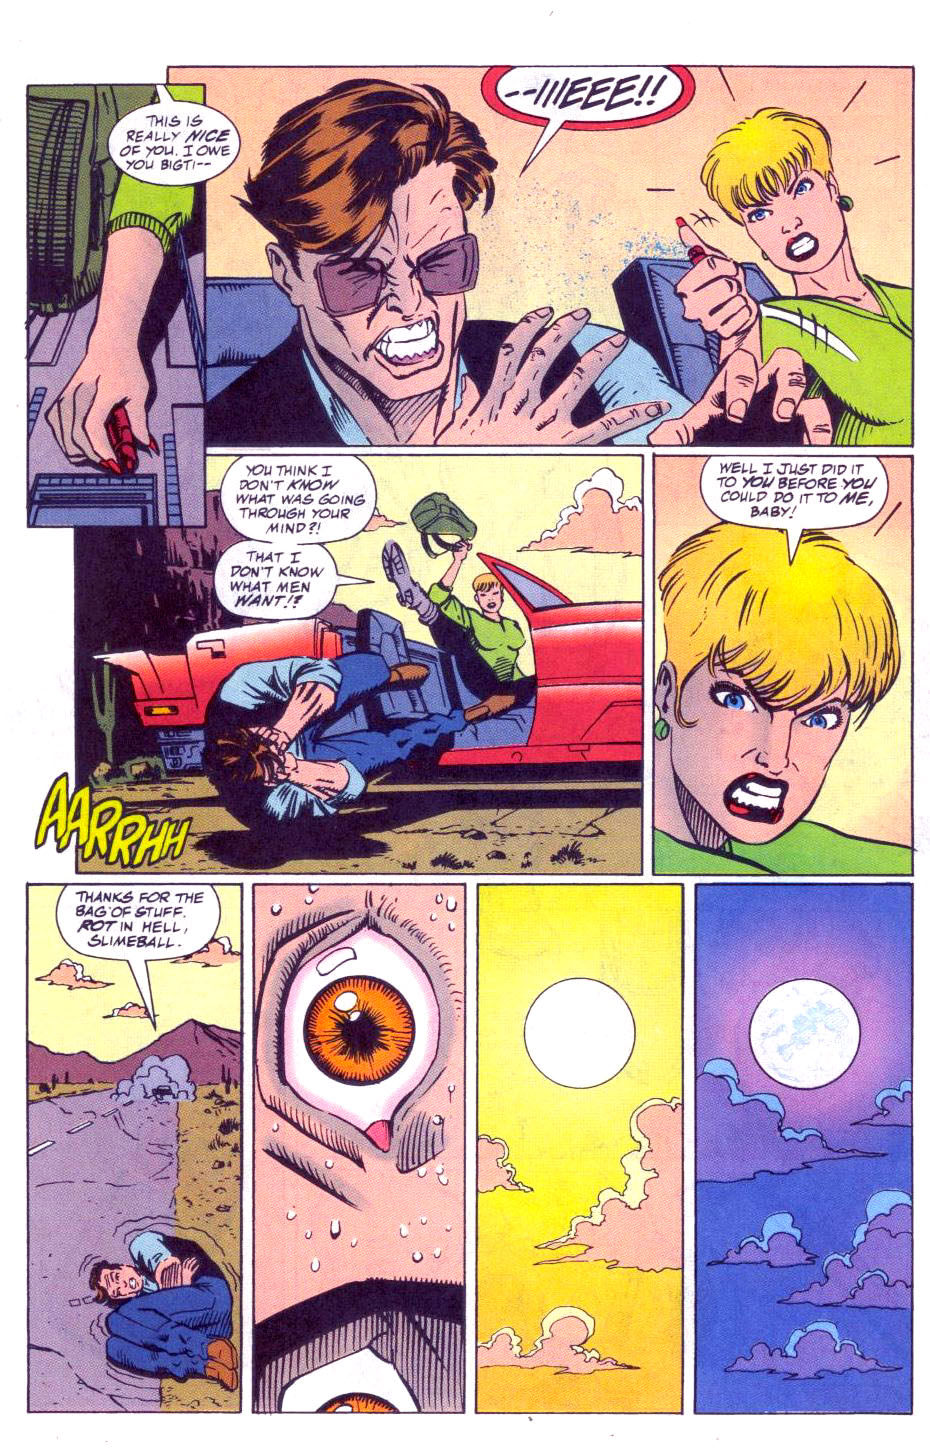 Spider-Man 2099 (1992) issue 31 - Page 5